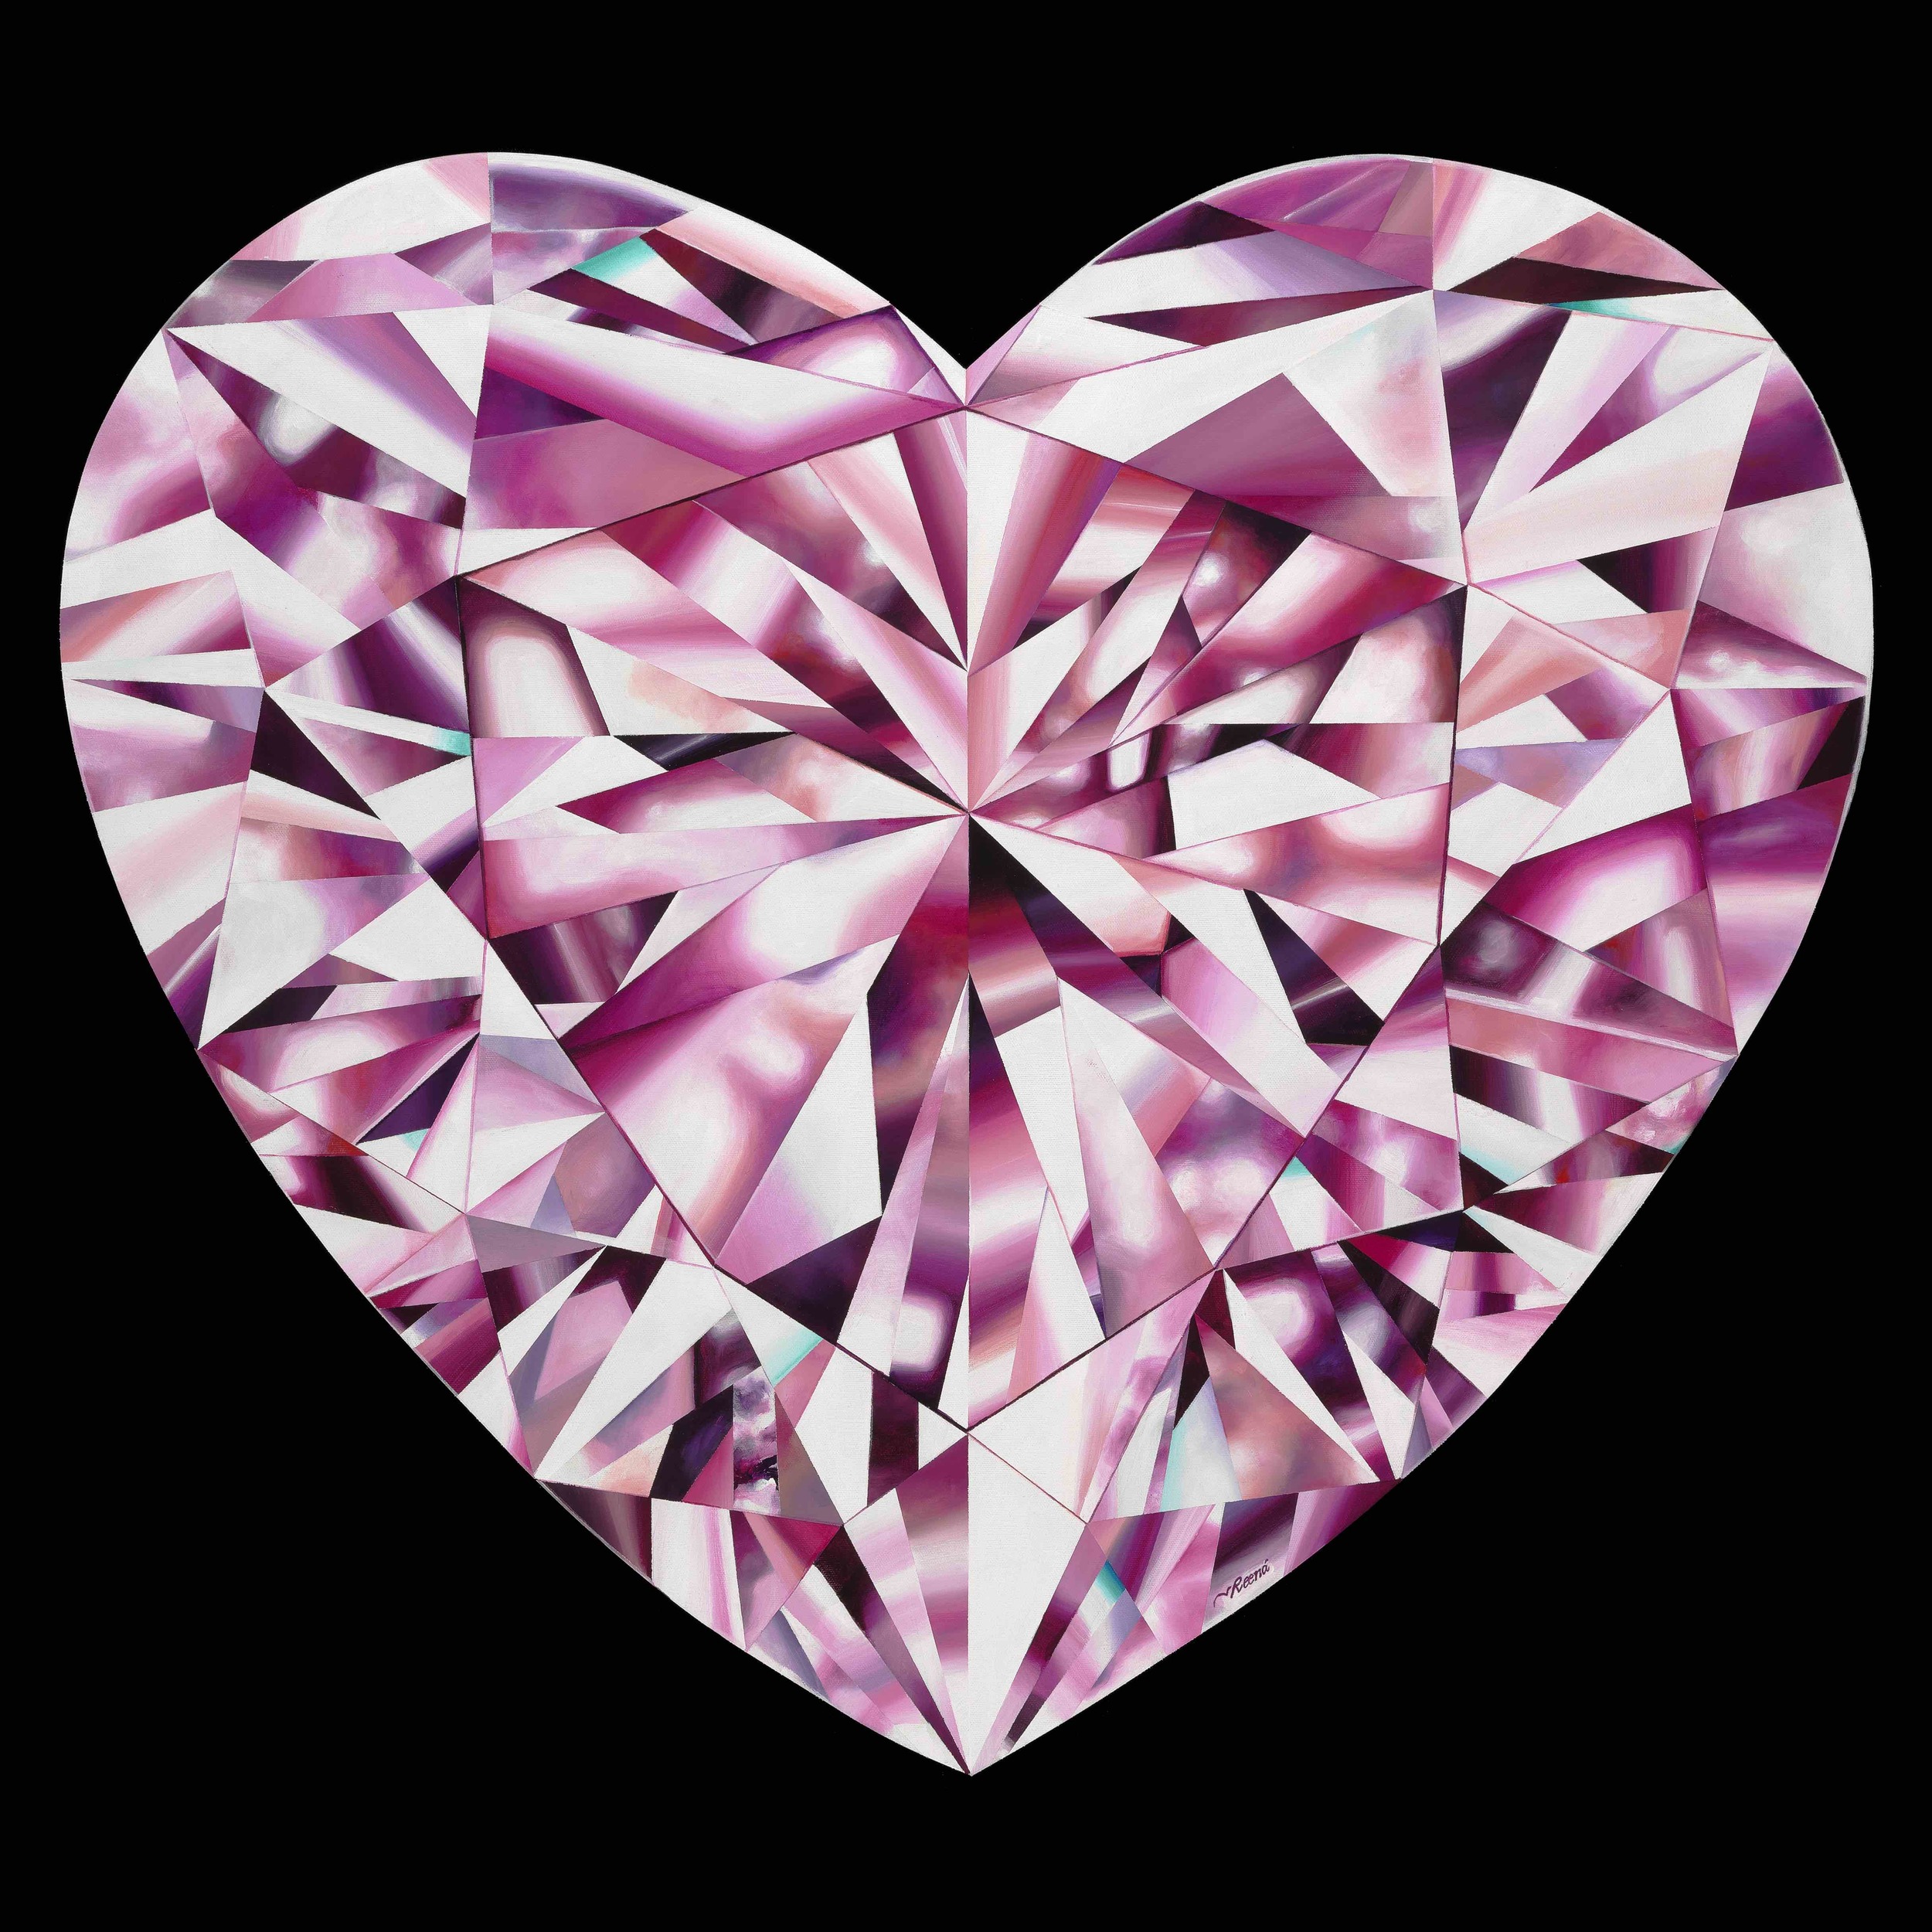 https://images.squarespace-cdn.com/content/v1/518ee9e6e4b02c1428e17e12/1471813968366-006ONVLQQMPVRJFMOVJU/Passionate+Heart_Portrait+Series_Diamond+Painting+by+Reena+Ahluwalia_Pink+Heart-Shaped+Diamond_Copyright